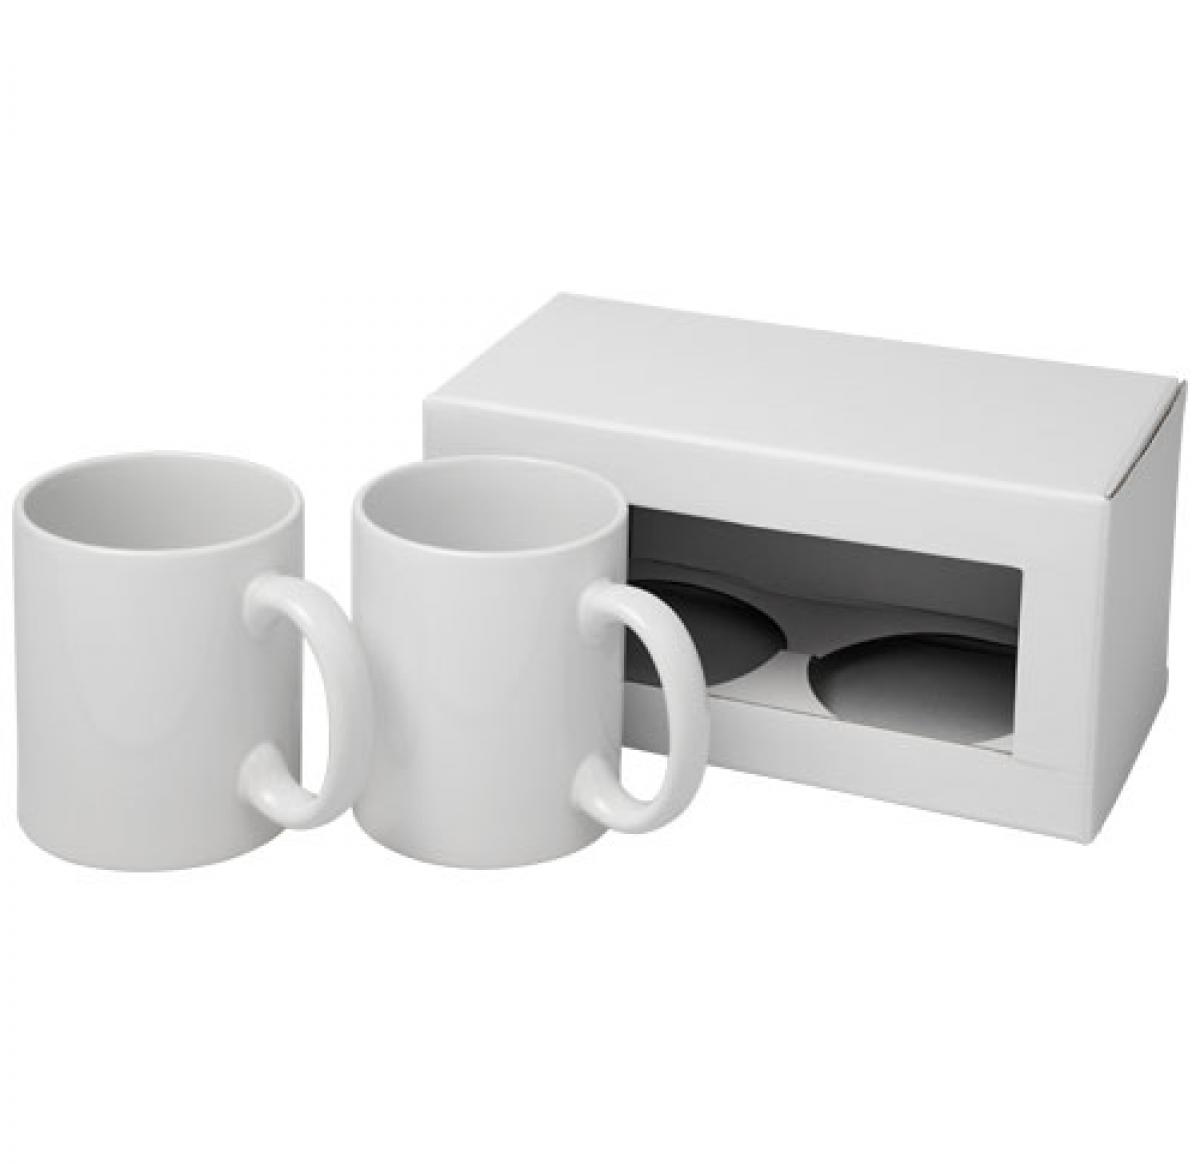 Custom Ceramic Sublimation Mugs 2-pieces Gift Sets